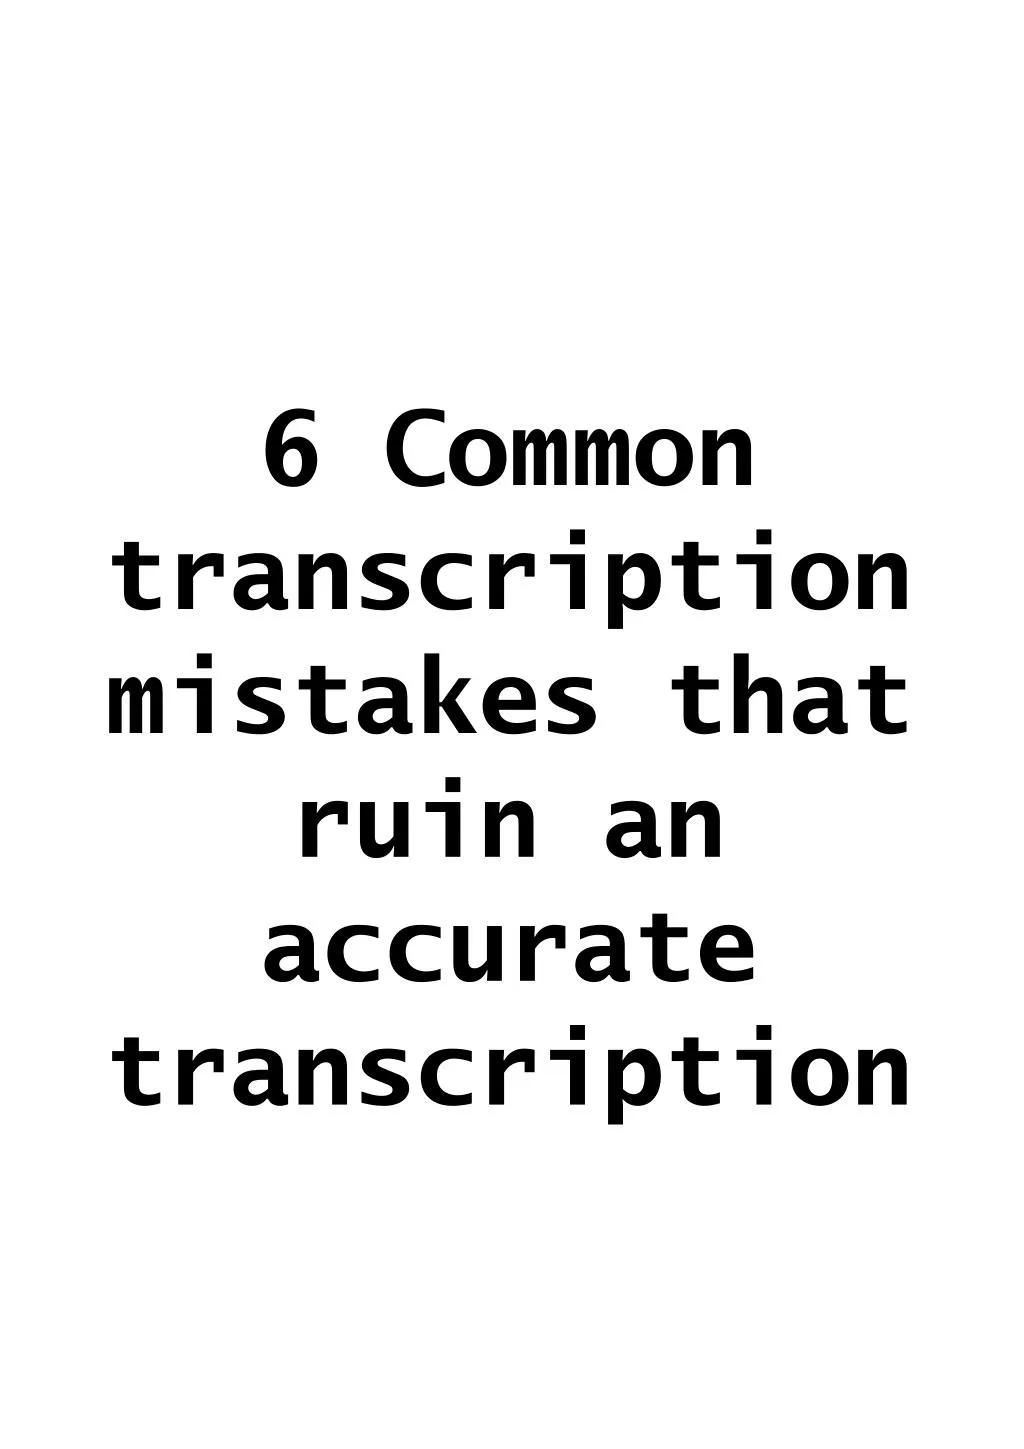 6 common transcription mistakes that ruin an accurate transcription